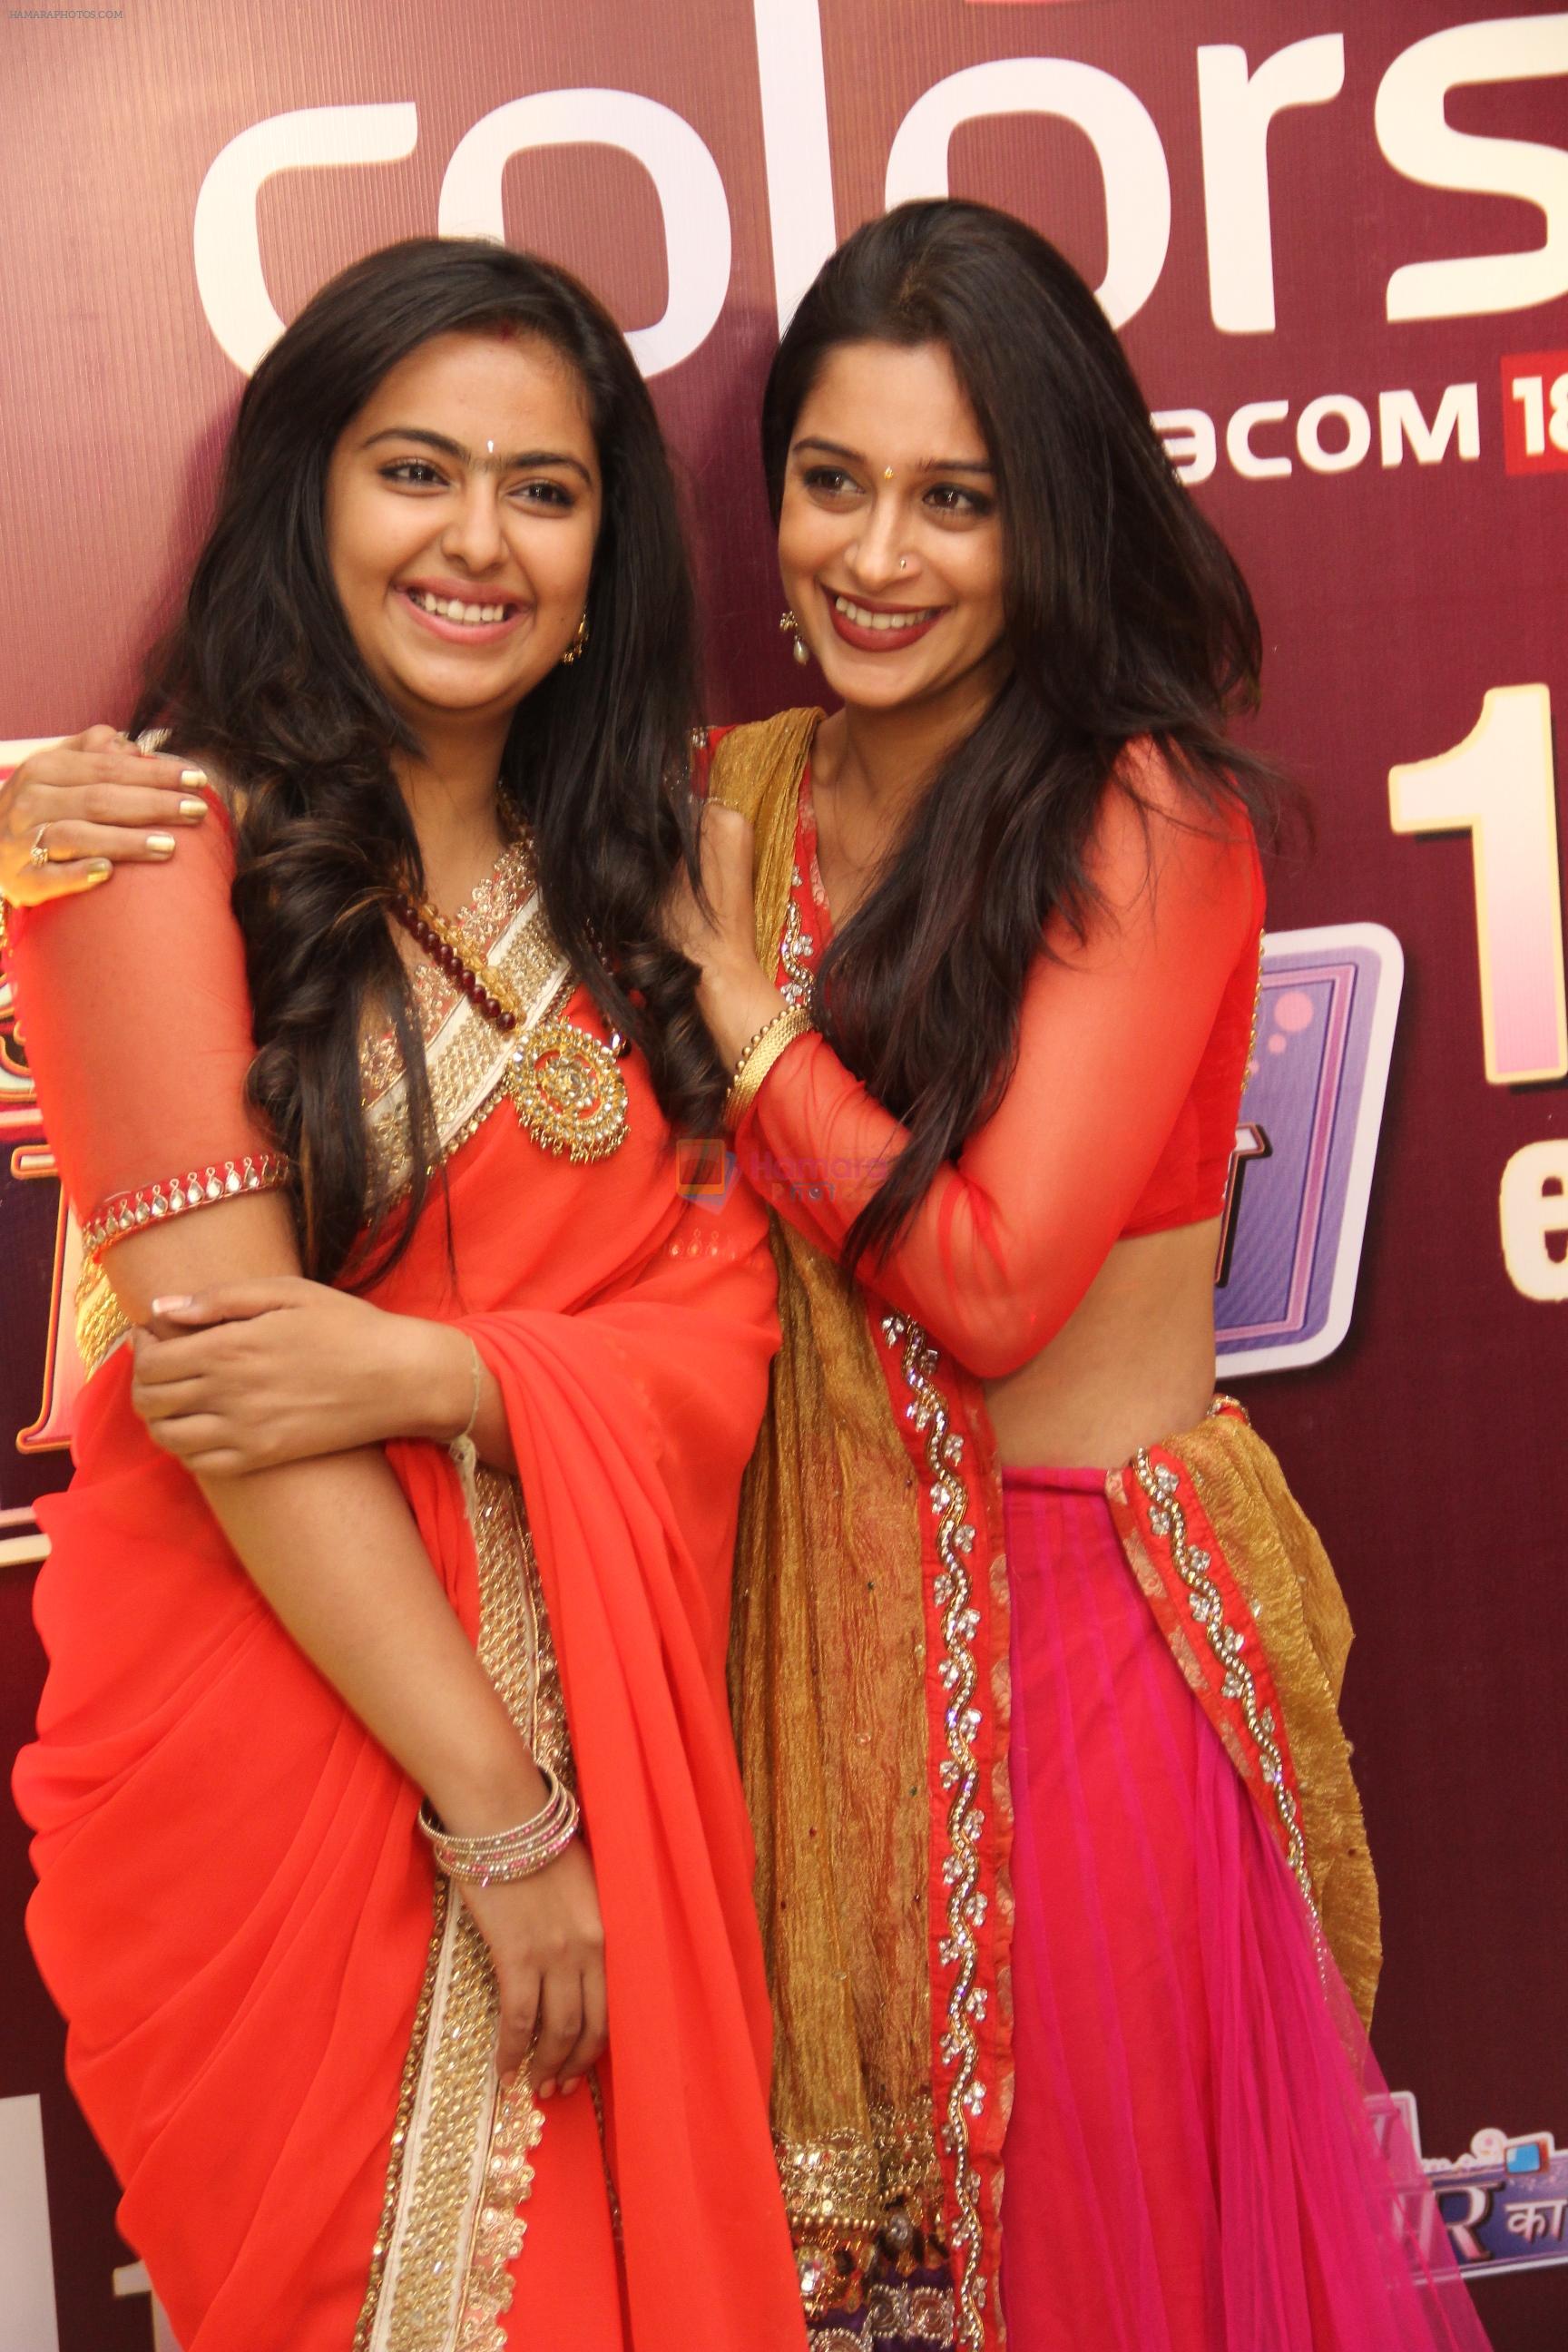 Roli aka Avika Gor with Simar aka Deepika Samson   at the celebration of Sasural Simar Ka 1000 episode completion